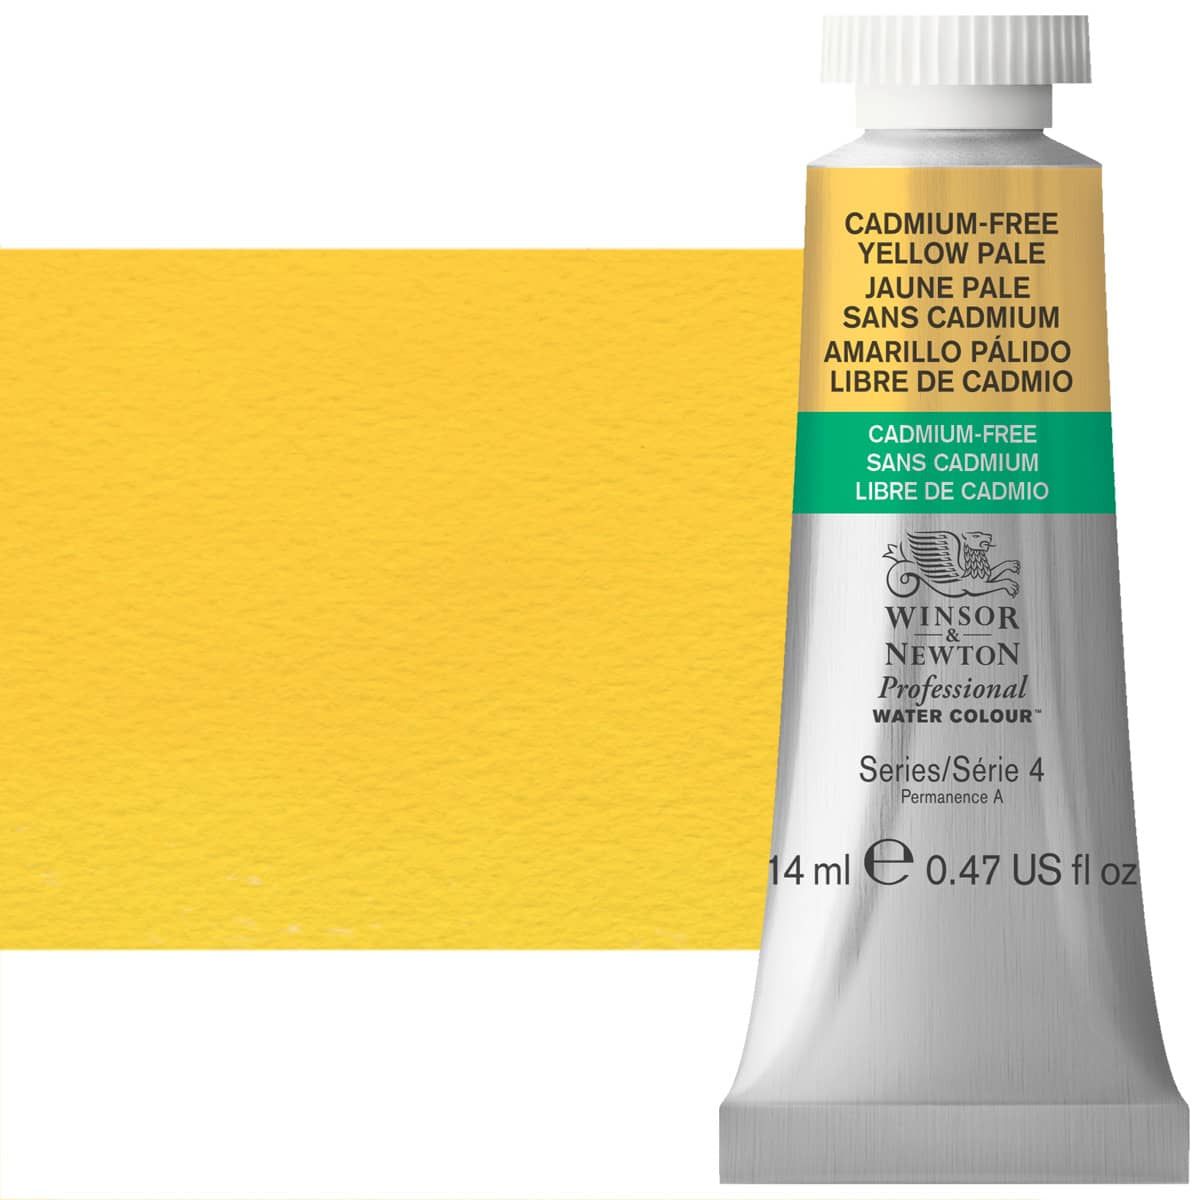 Winsor & Newton Professional Watercolor - Cadmium-Free Yellow Pale, 14ml Tube